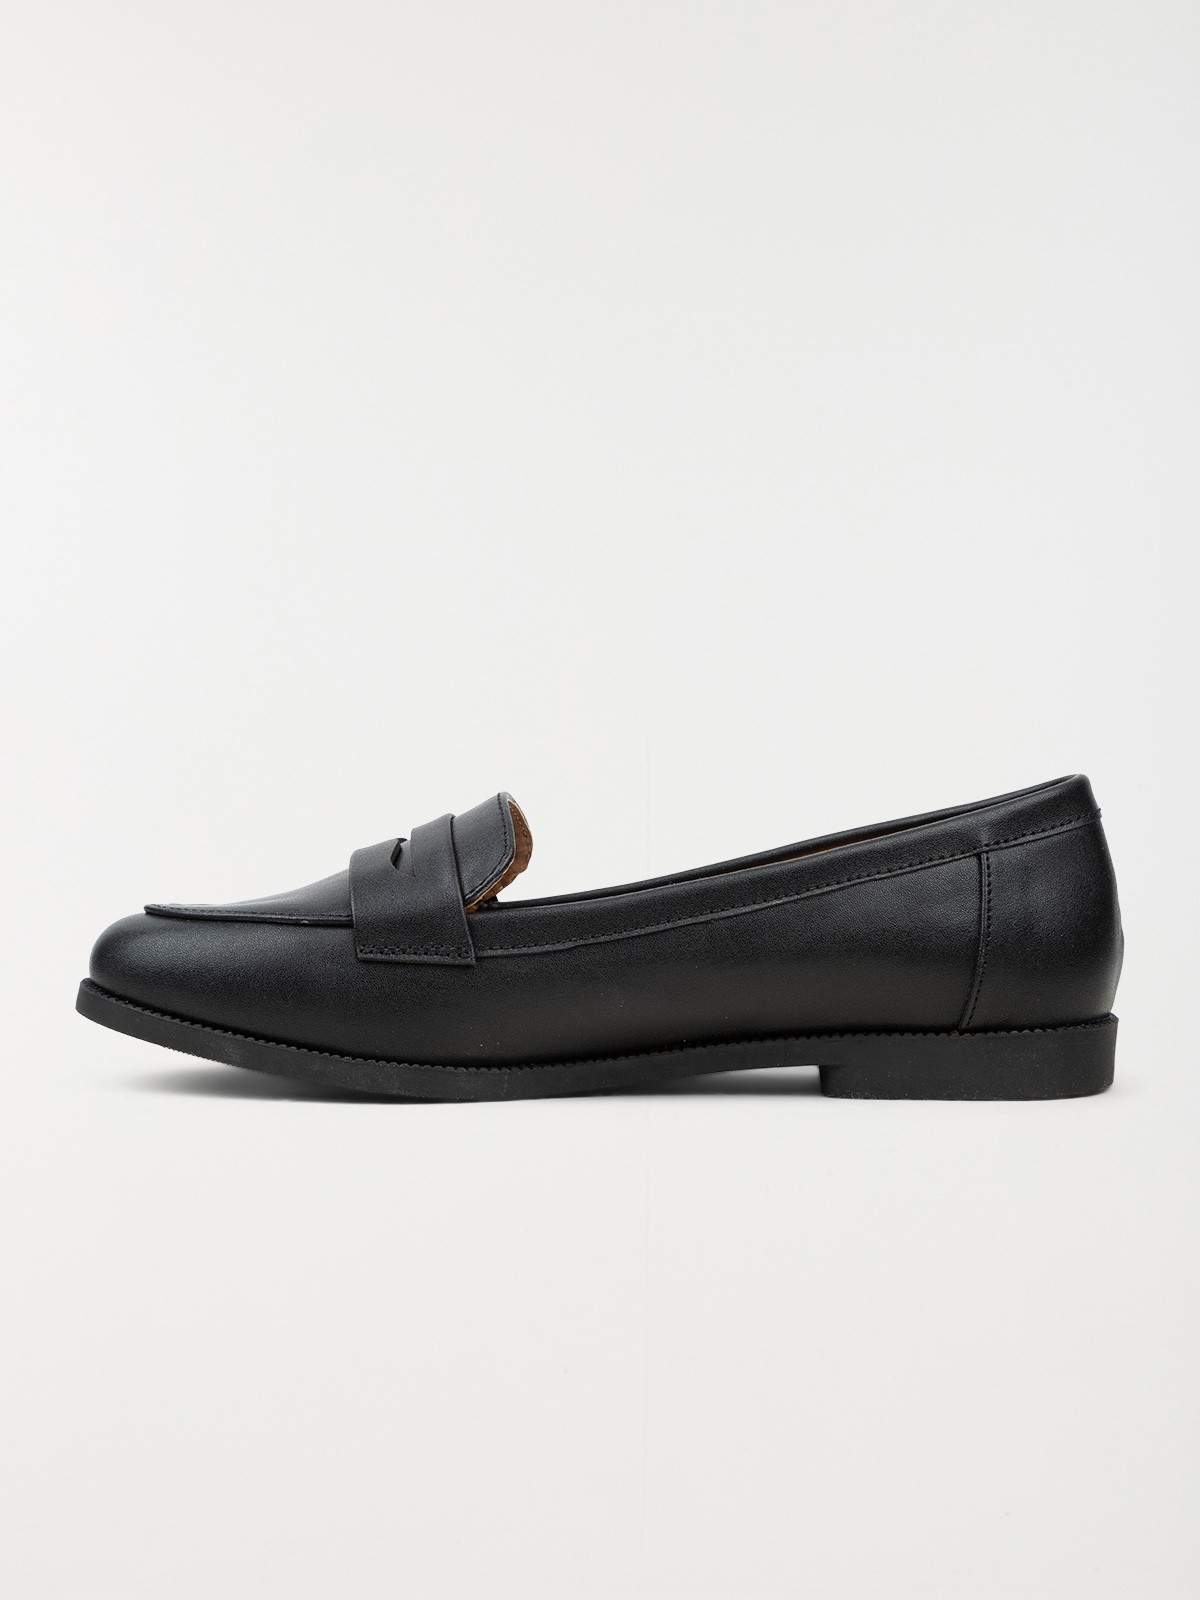 Chaussures confort femme noires (36-41) - DistriCenter